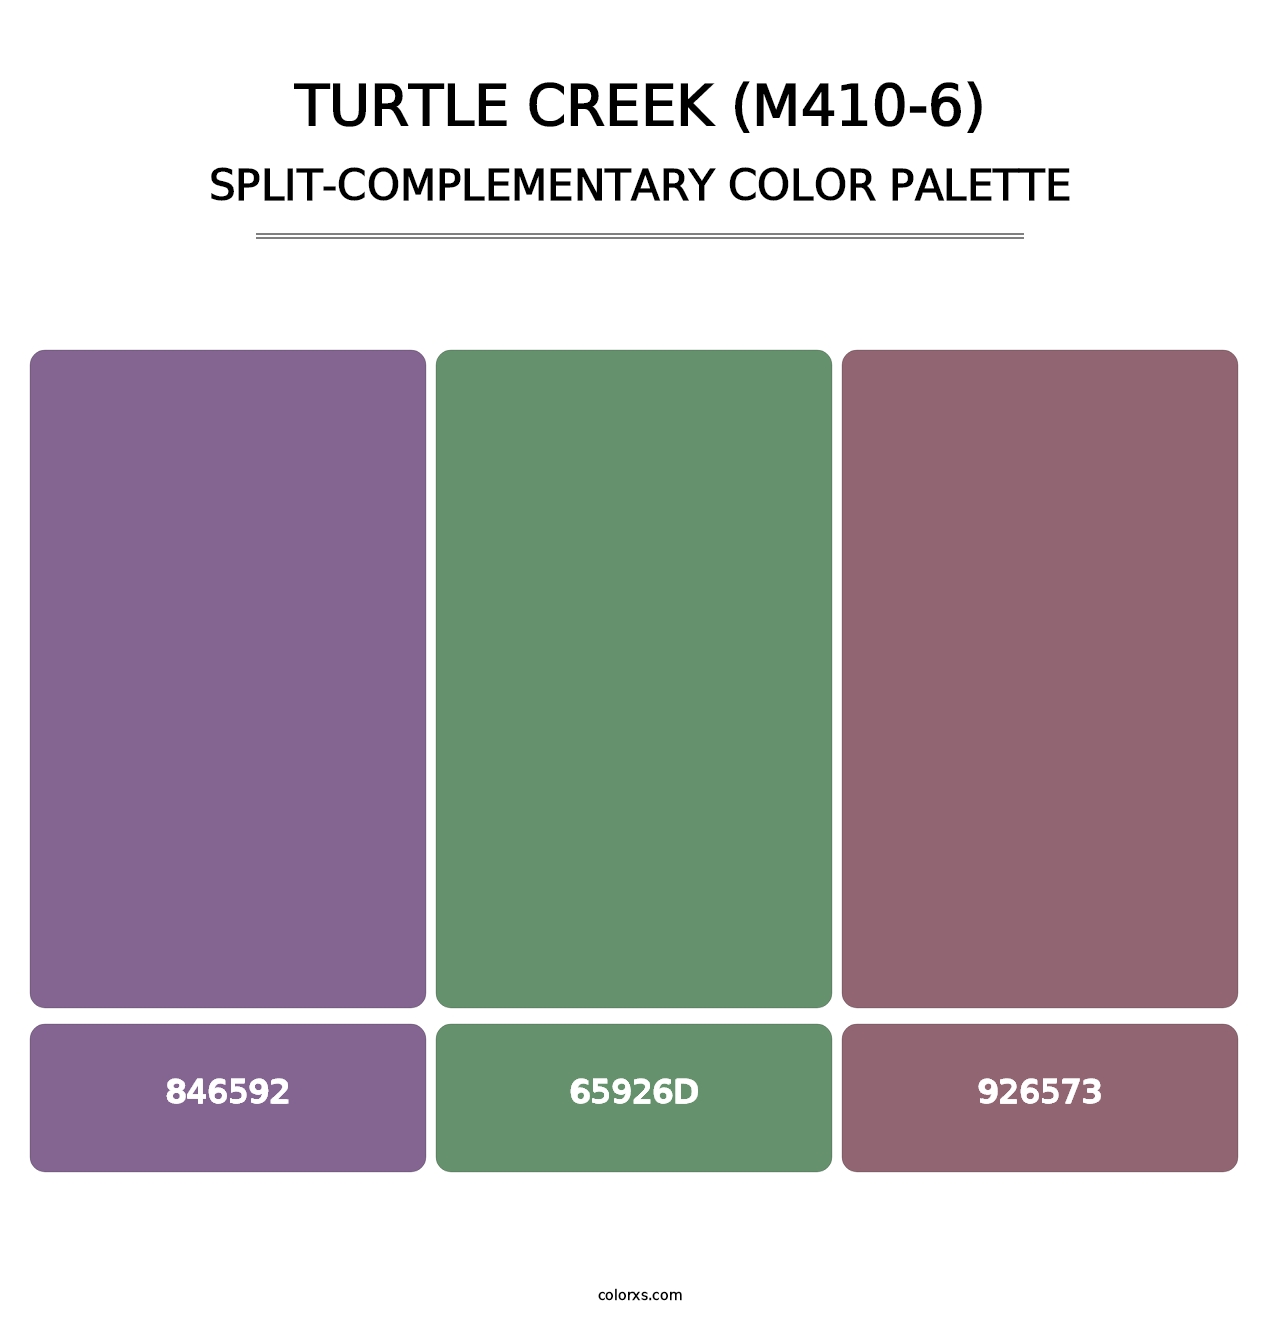 Turtle Creek (M410-6) - Split-Complementary Color Palette